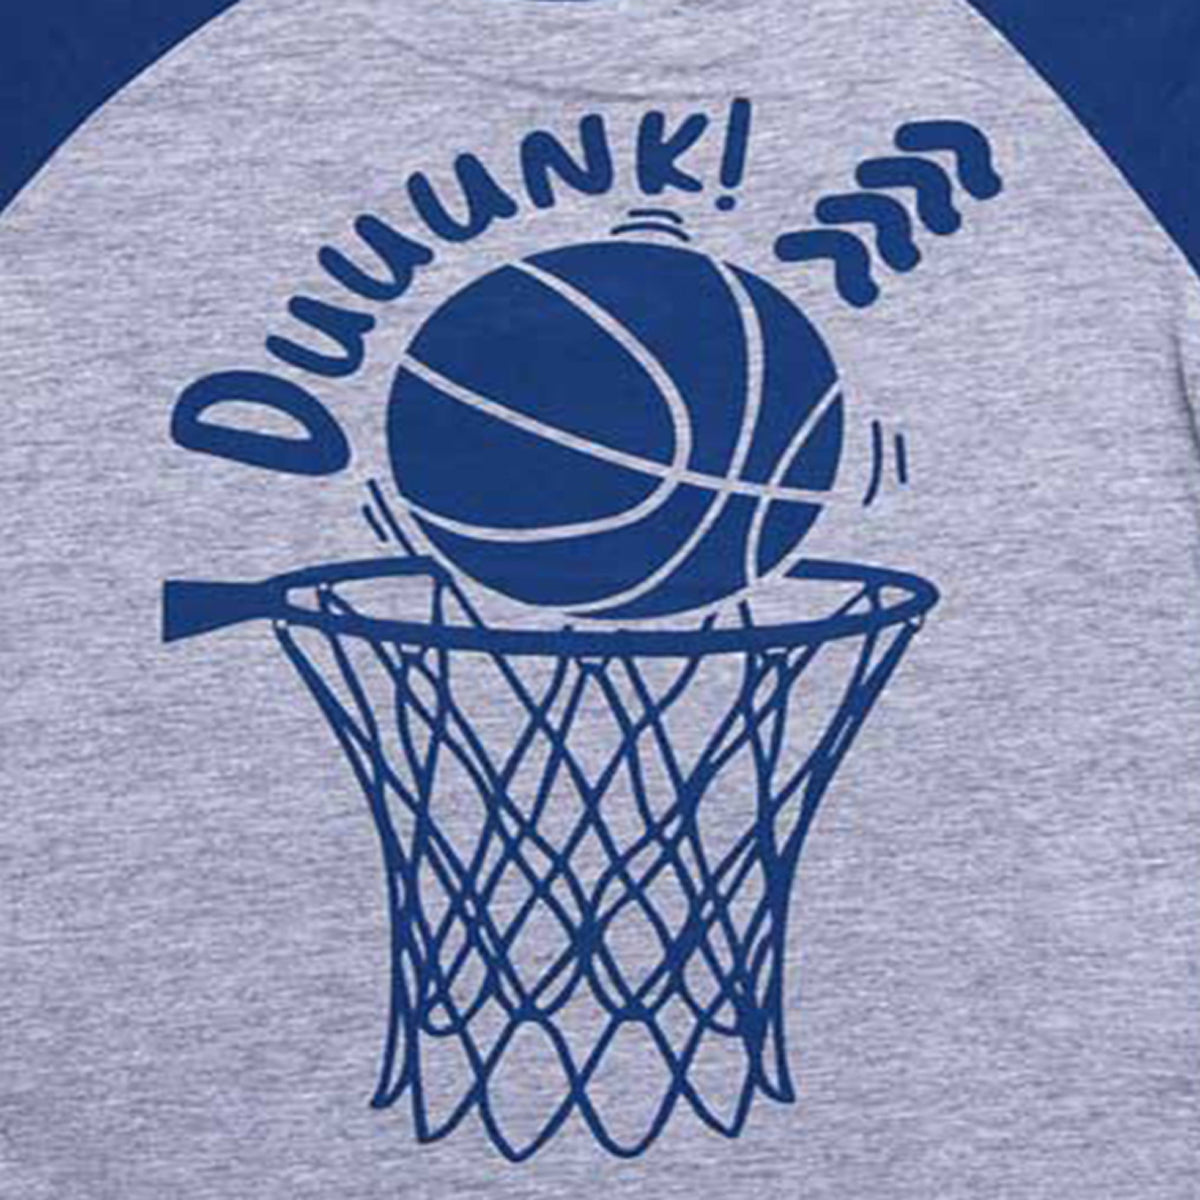 Boys Grey and Blue Raglan Basketball T-Shirt with 'Dunk' Graphic